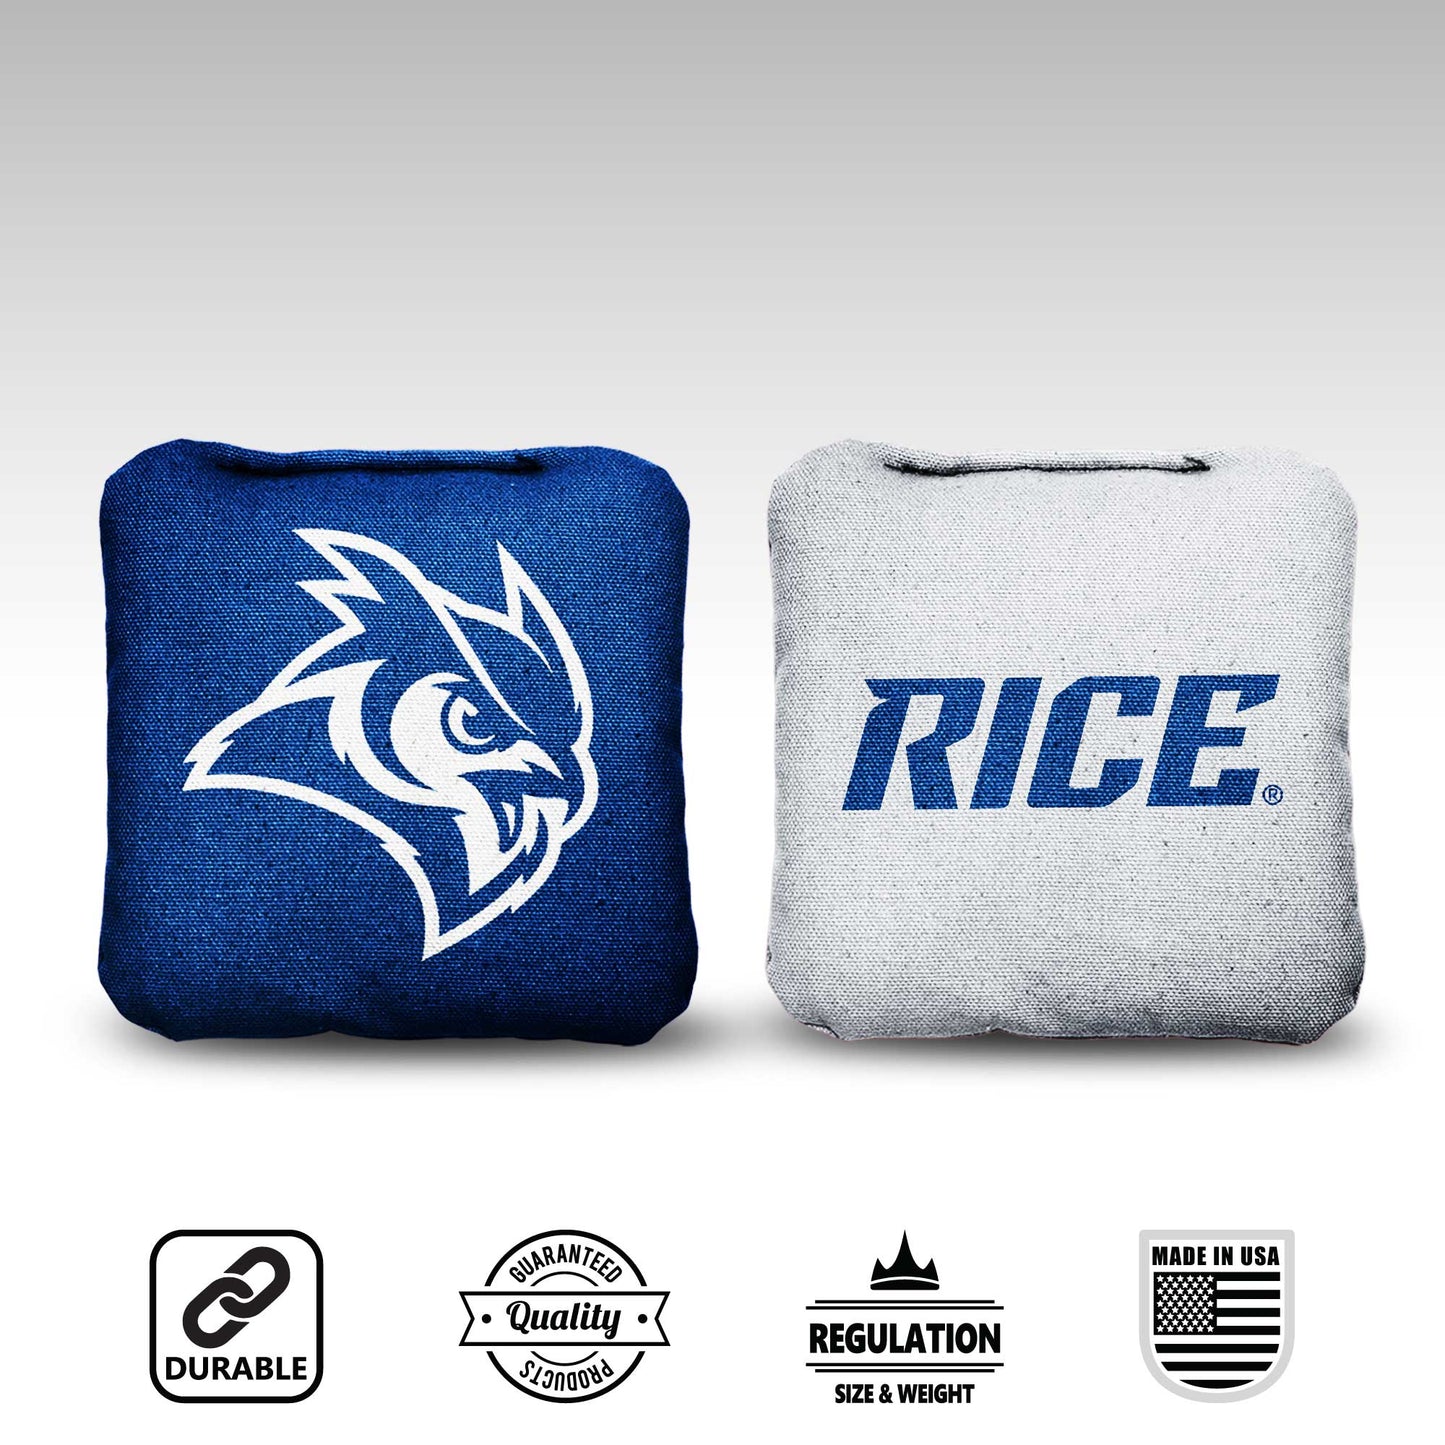 Rice University Cornhole Bags - 8 Cornhole Bags